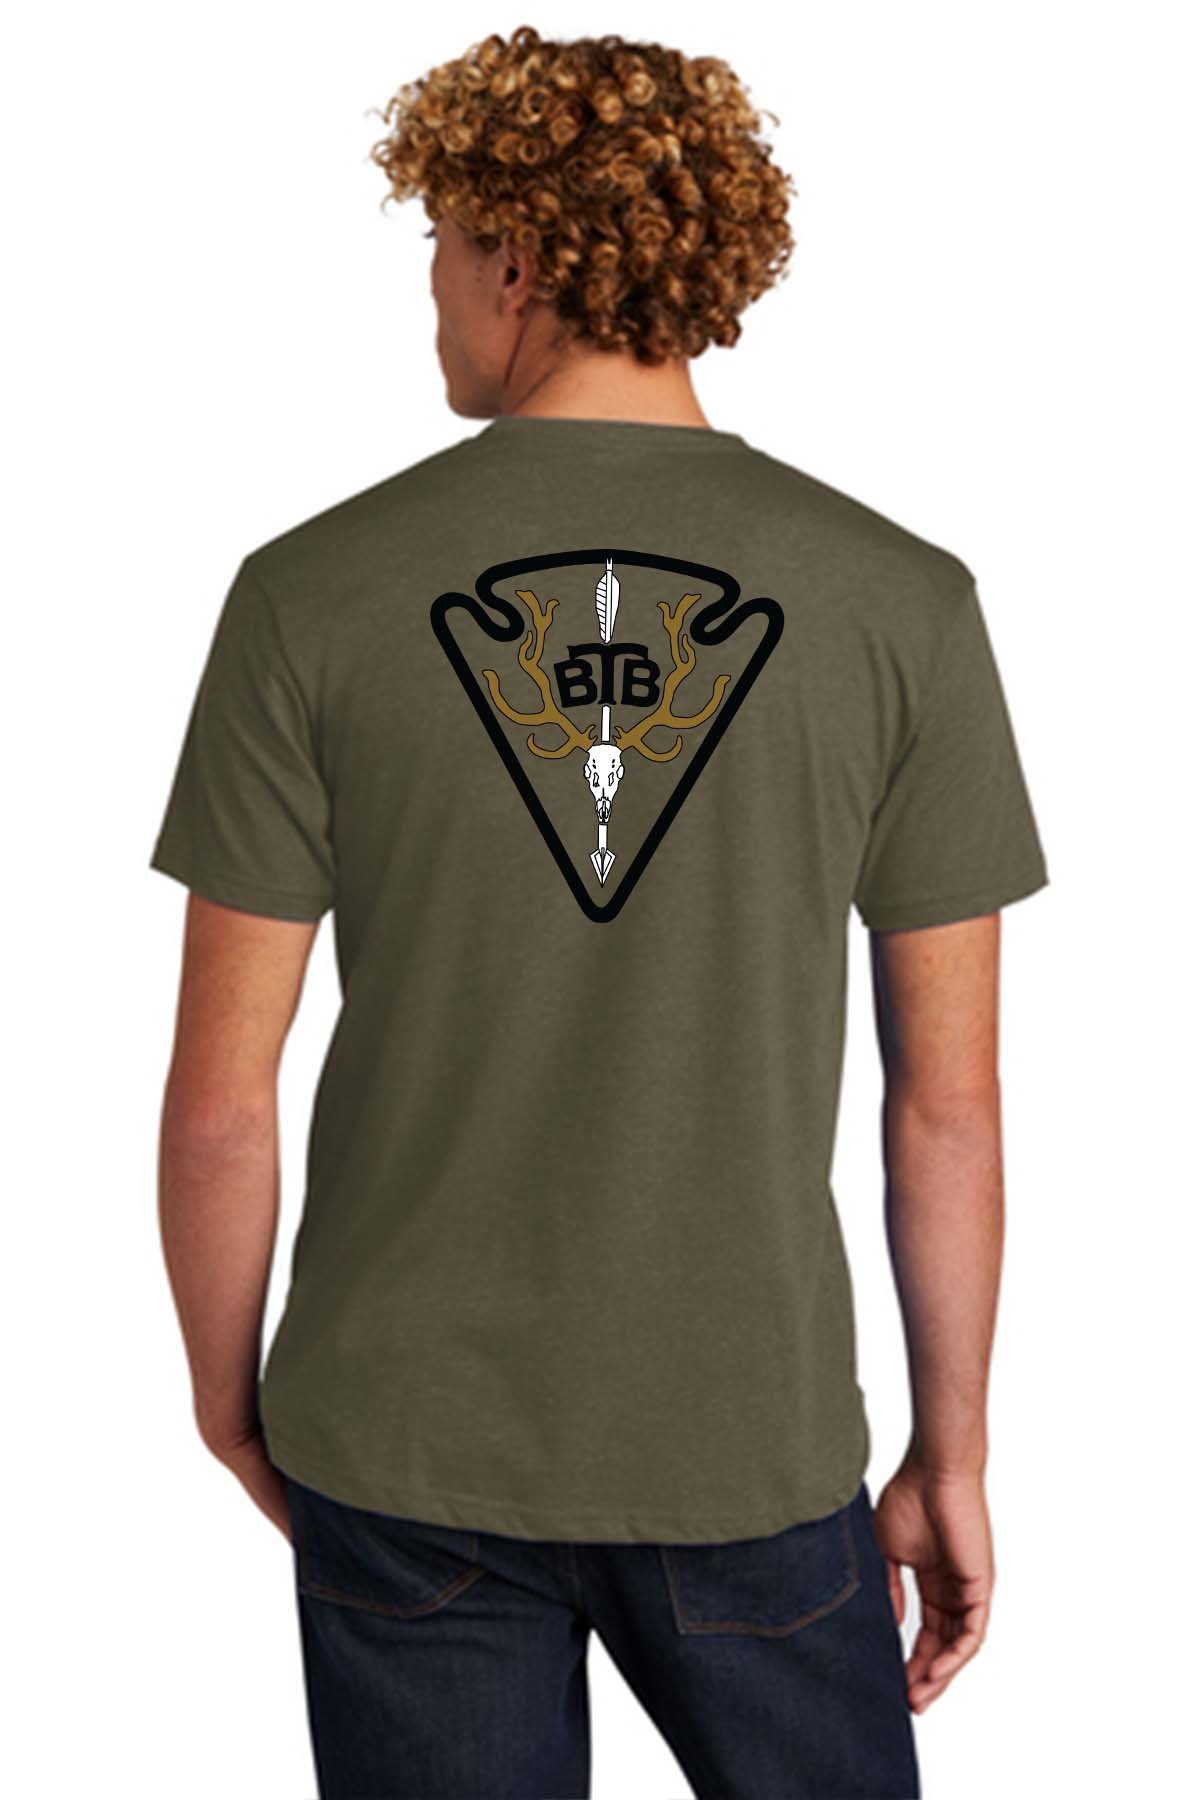 BTB_T-shirt MilitaryGreen Back.jpg